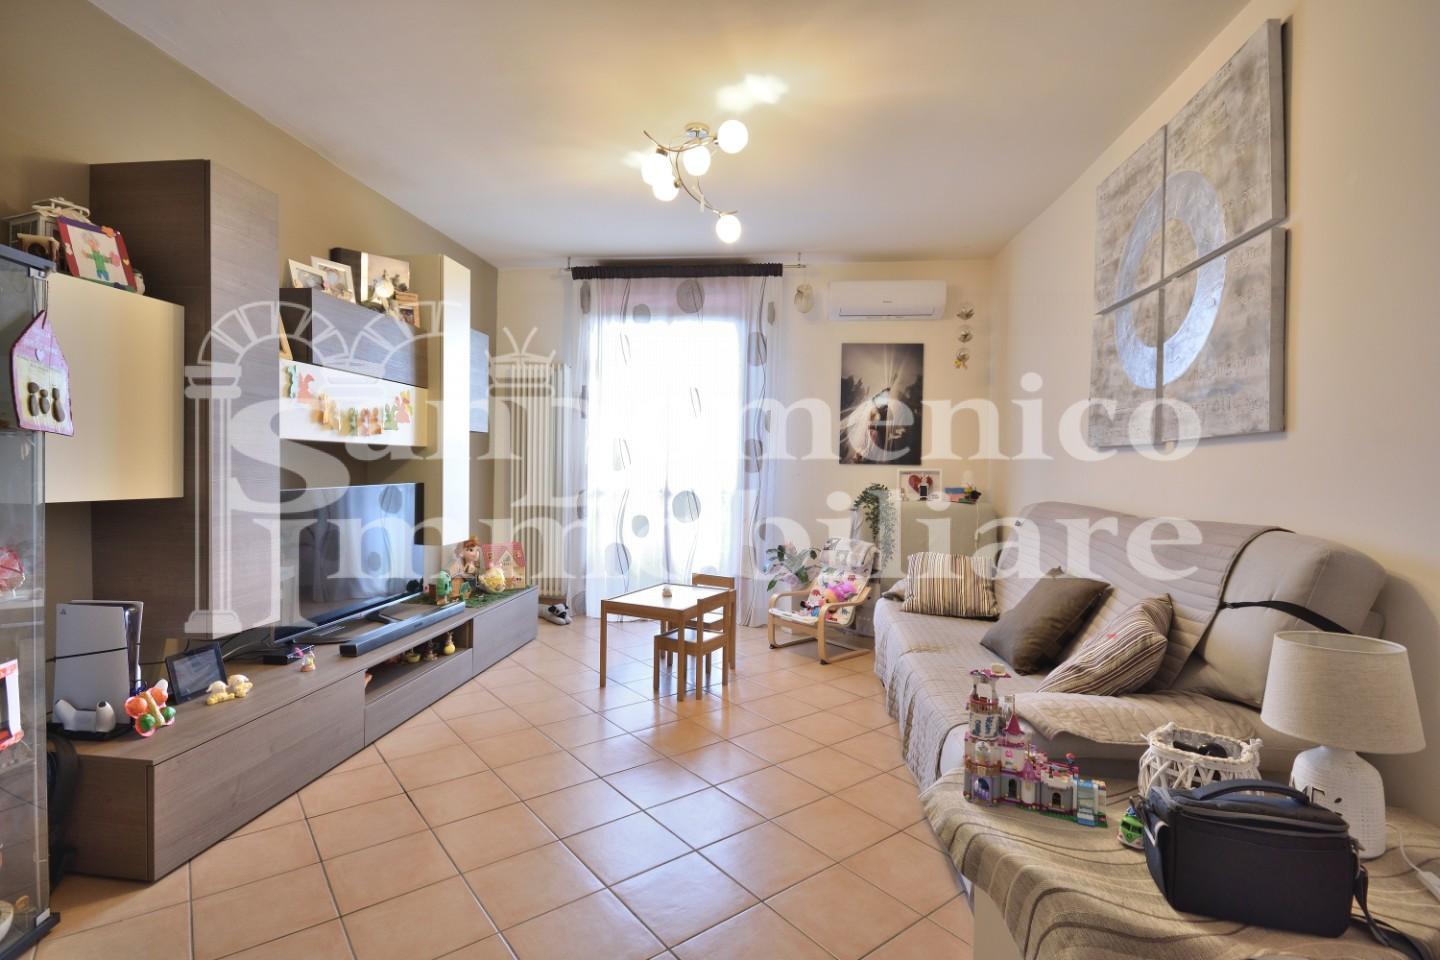 Apartment for sale in San Giuliano Terme (PI)